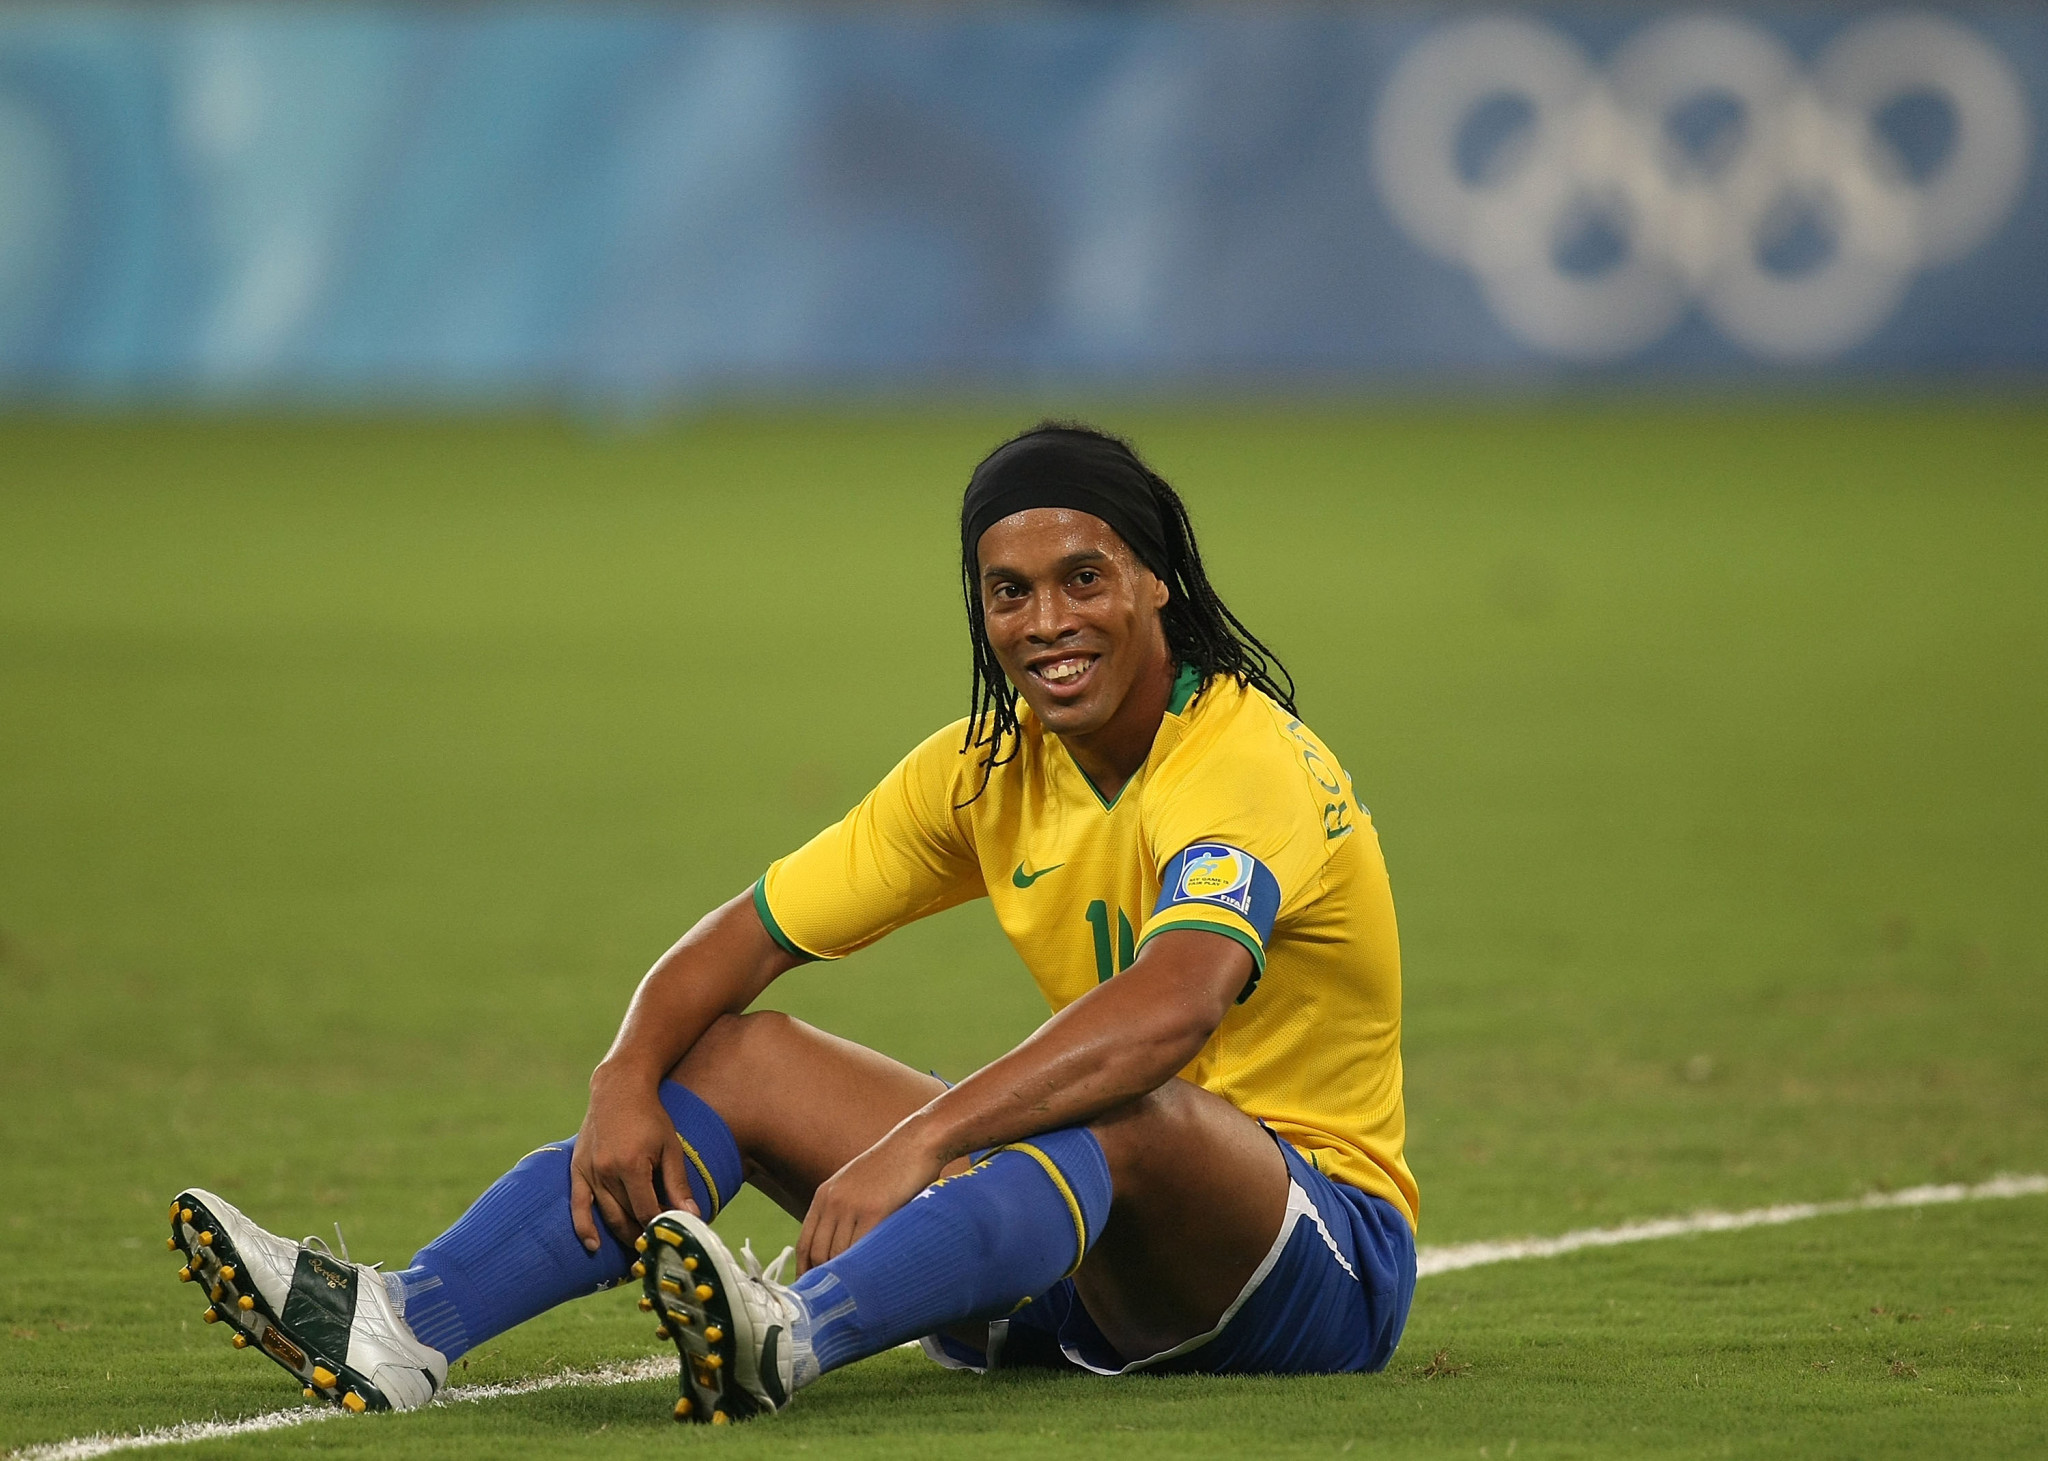 Ronaldinho set to attend teqball's first European Games qualifier